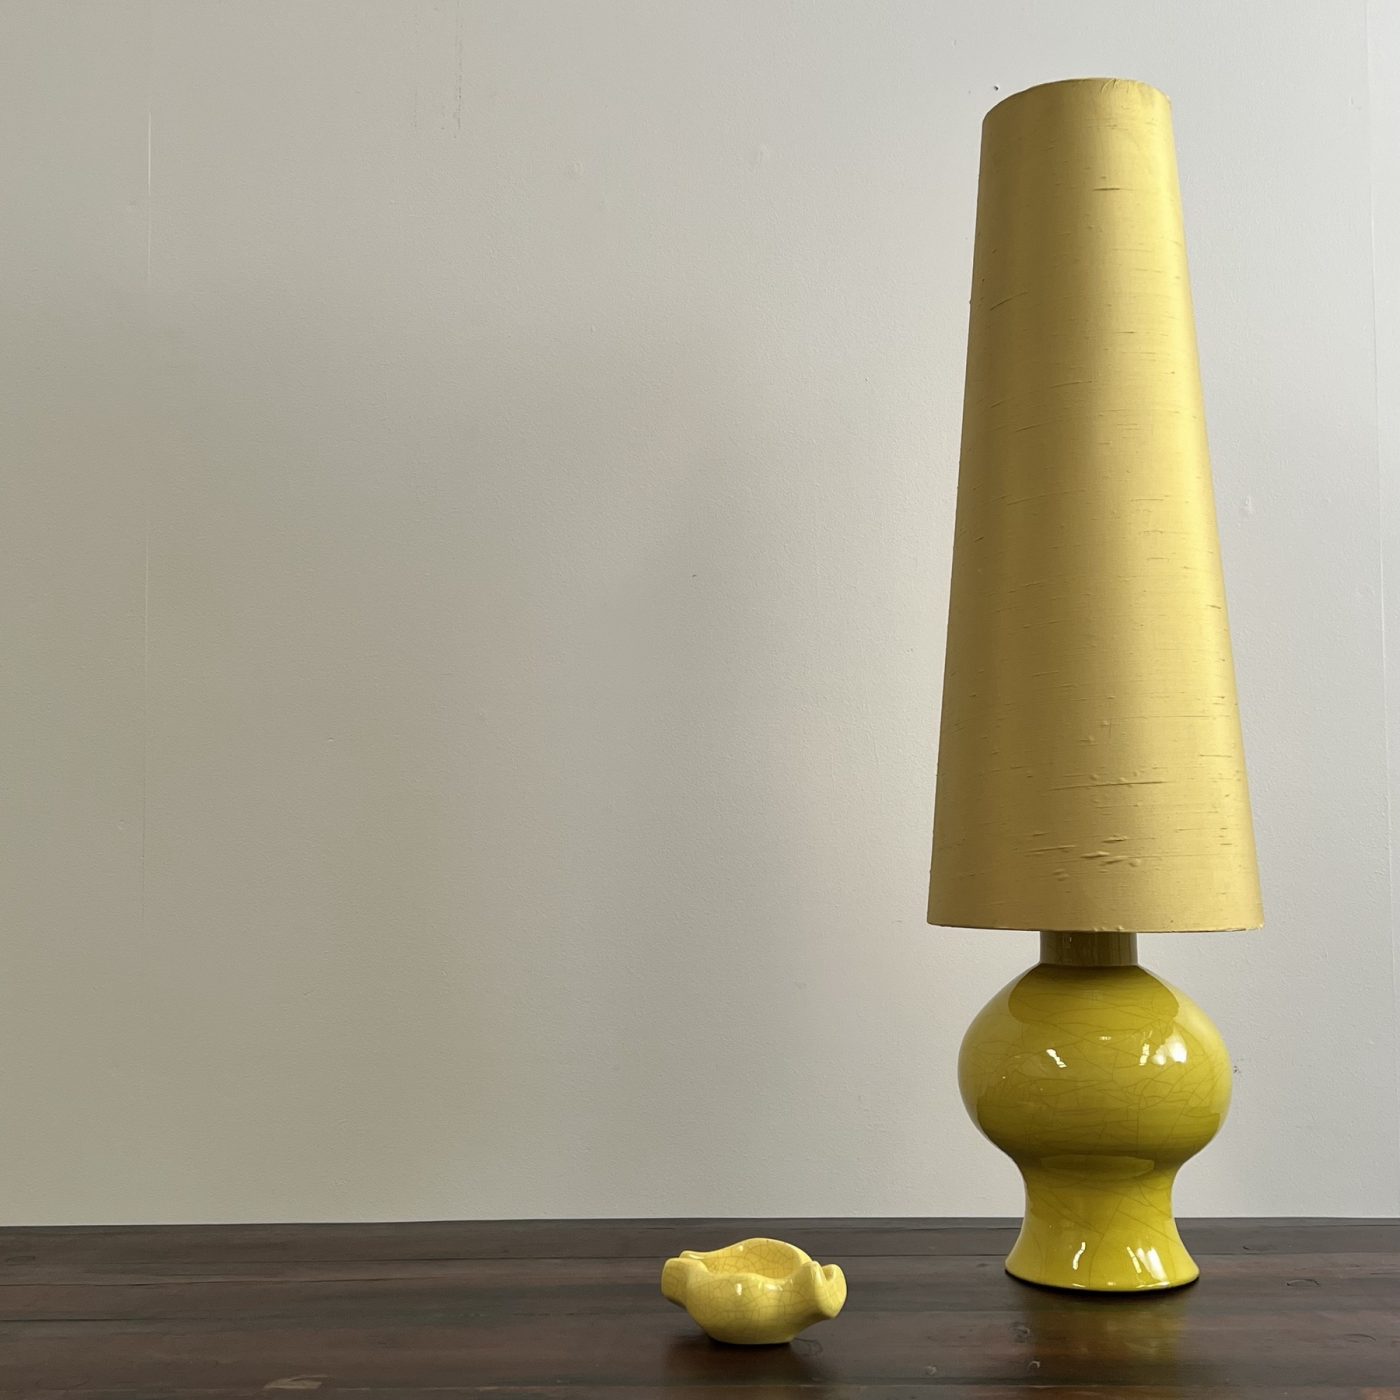 objet-vagabond-ceramic-lamp0004